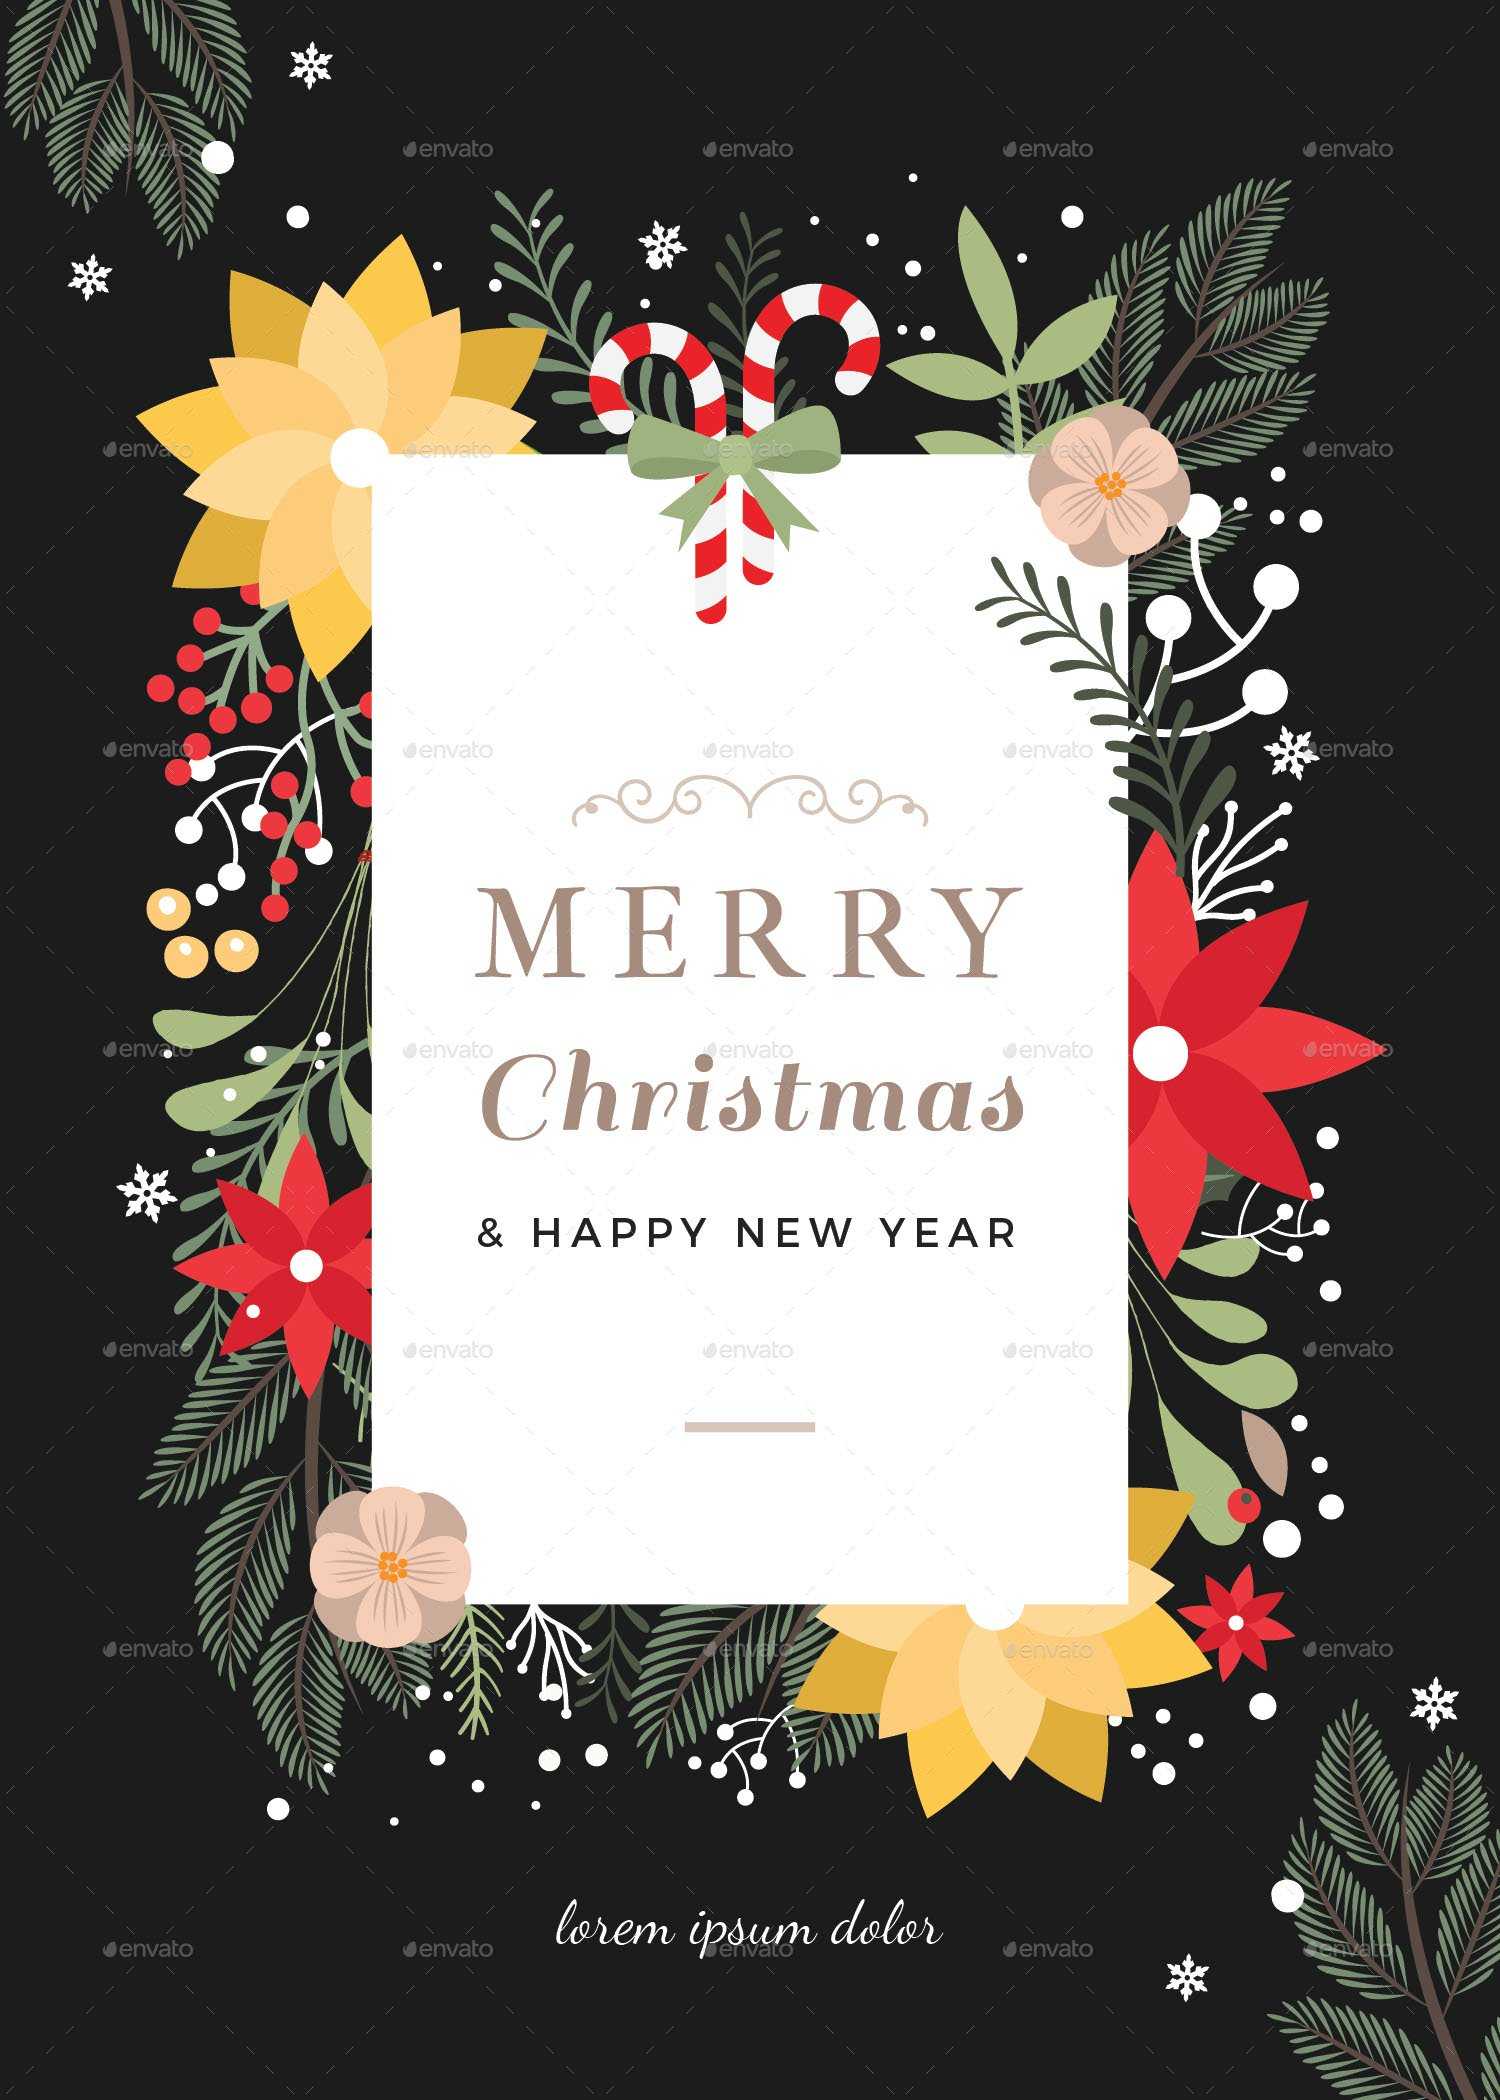 45+Christmas Premium & Free Psd Holiday Card Templates For For Christmas Photo Cards Templates Free Downloads